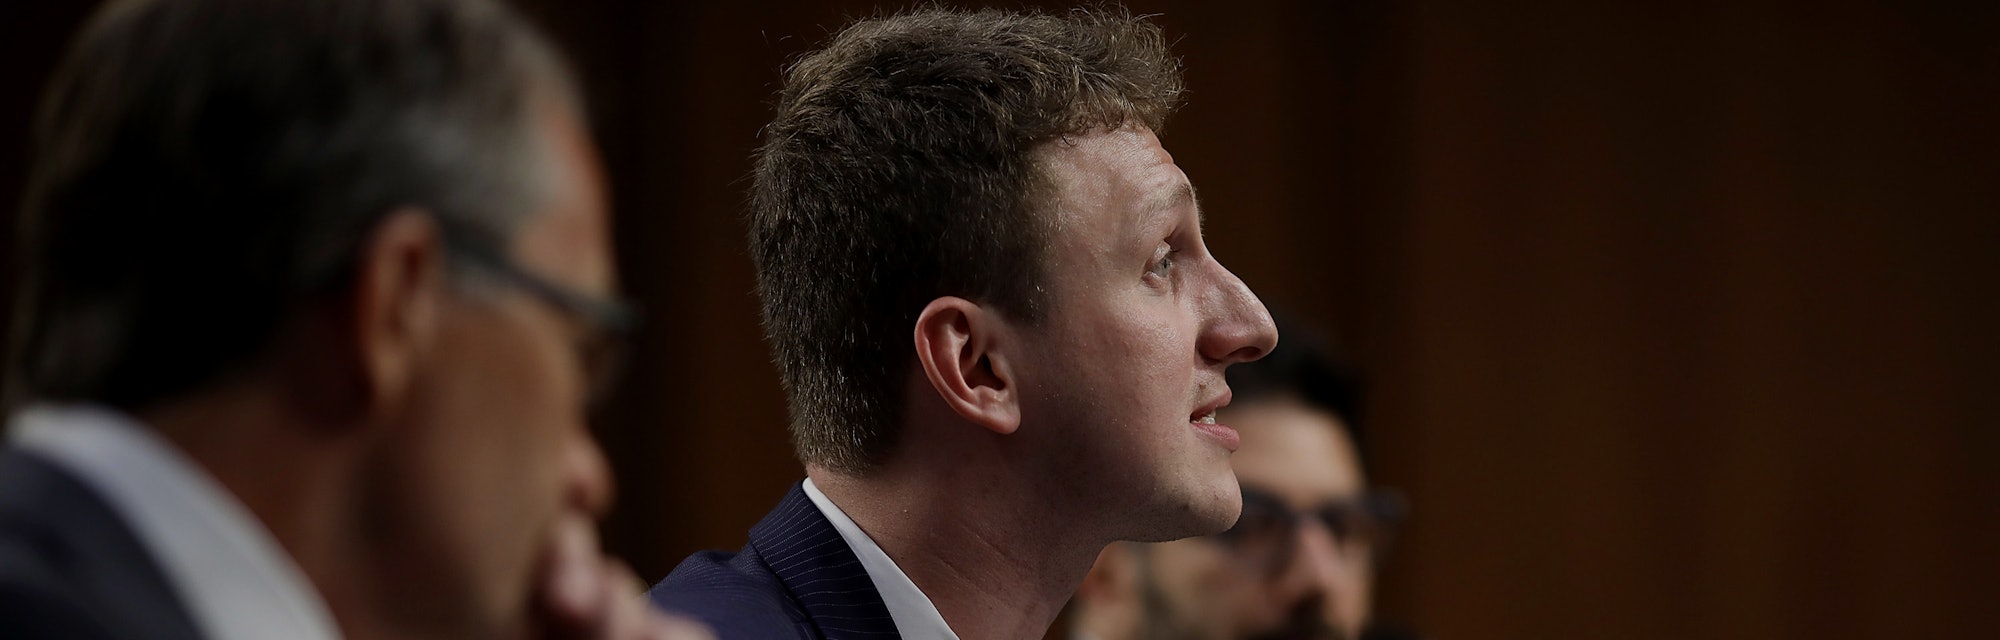 Facebook's Cambridge Analytica scandal cost it $5 billion.